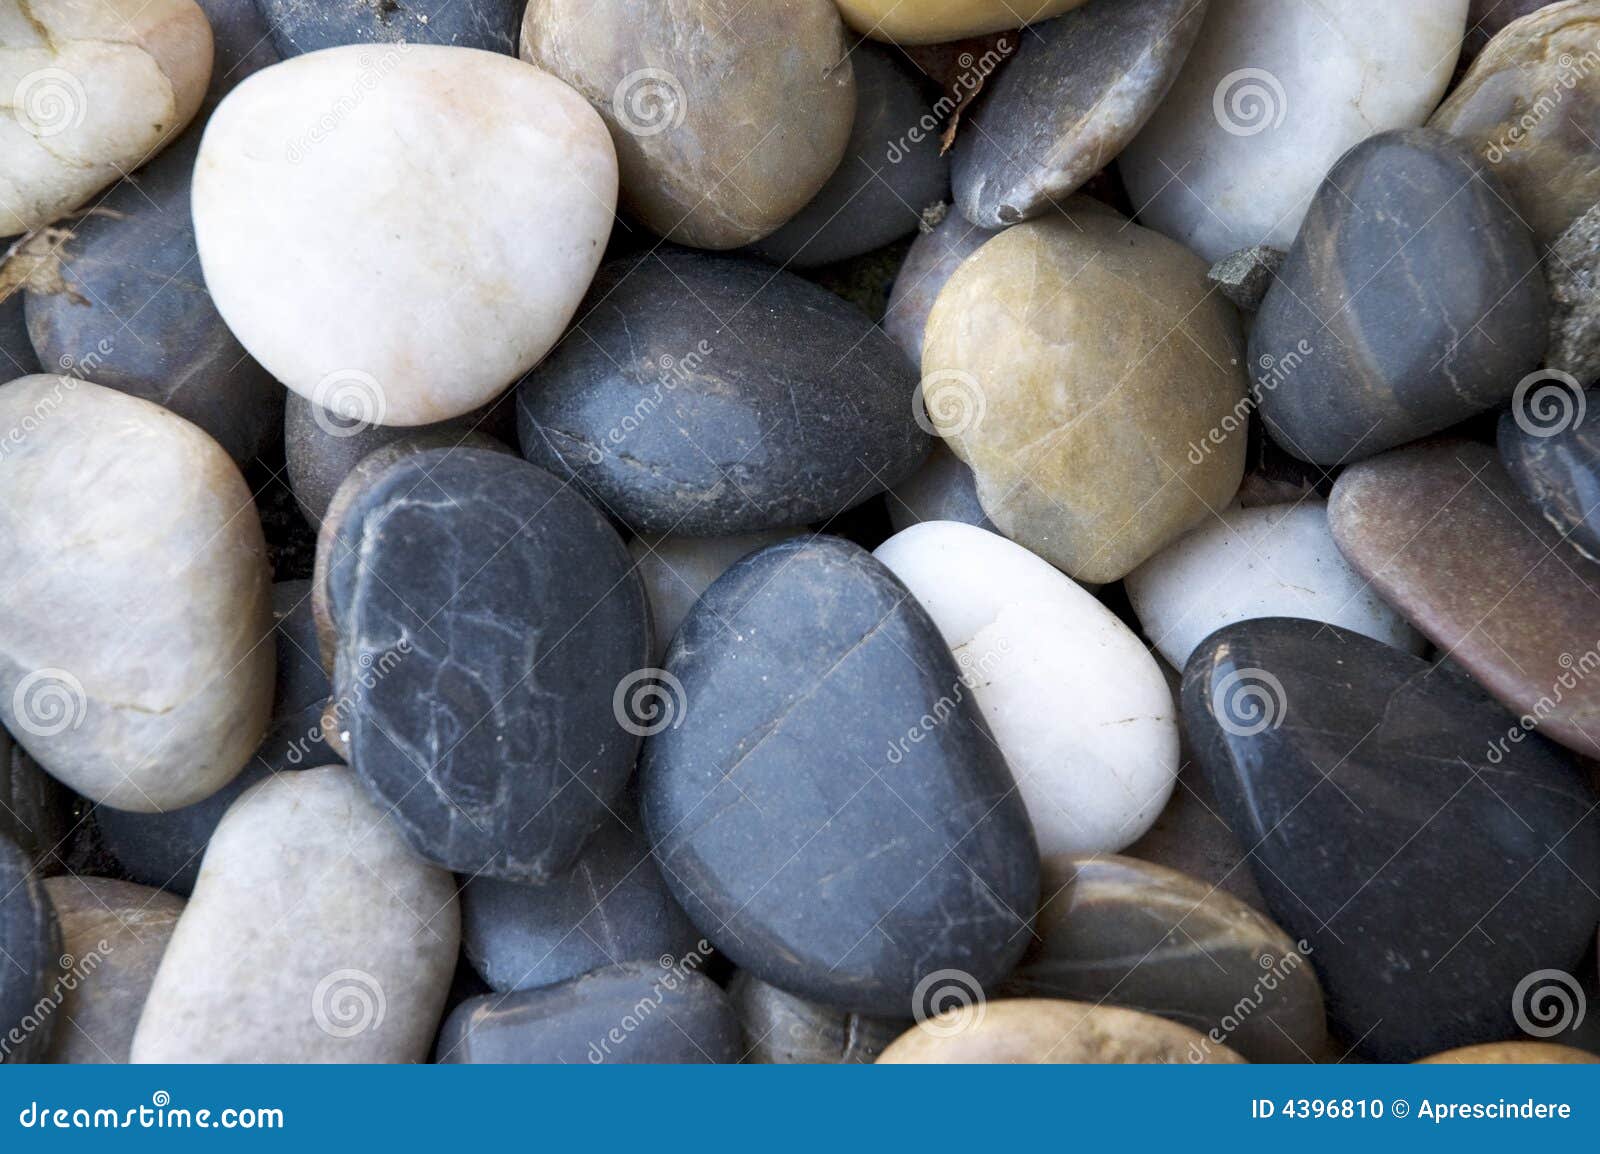 pebbles beach